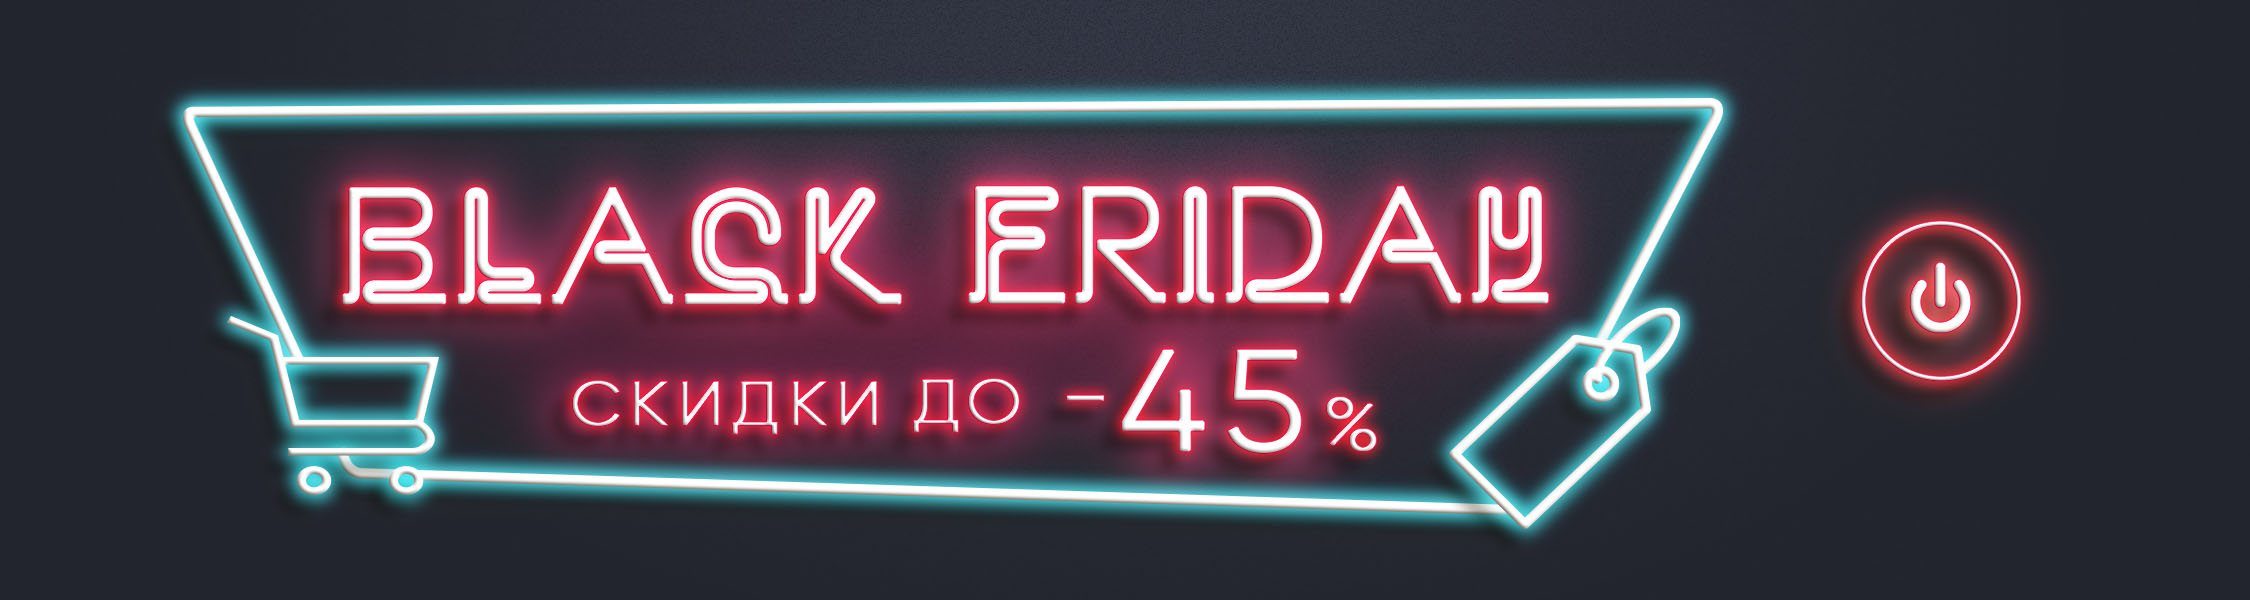 Black Friday - черная пятница